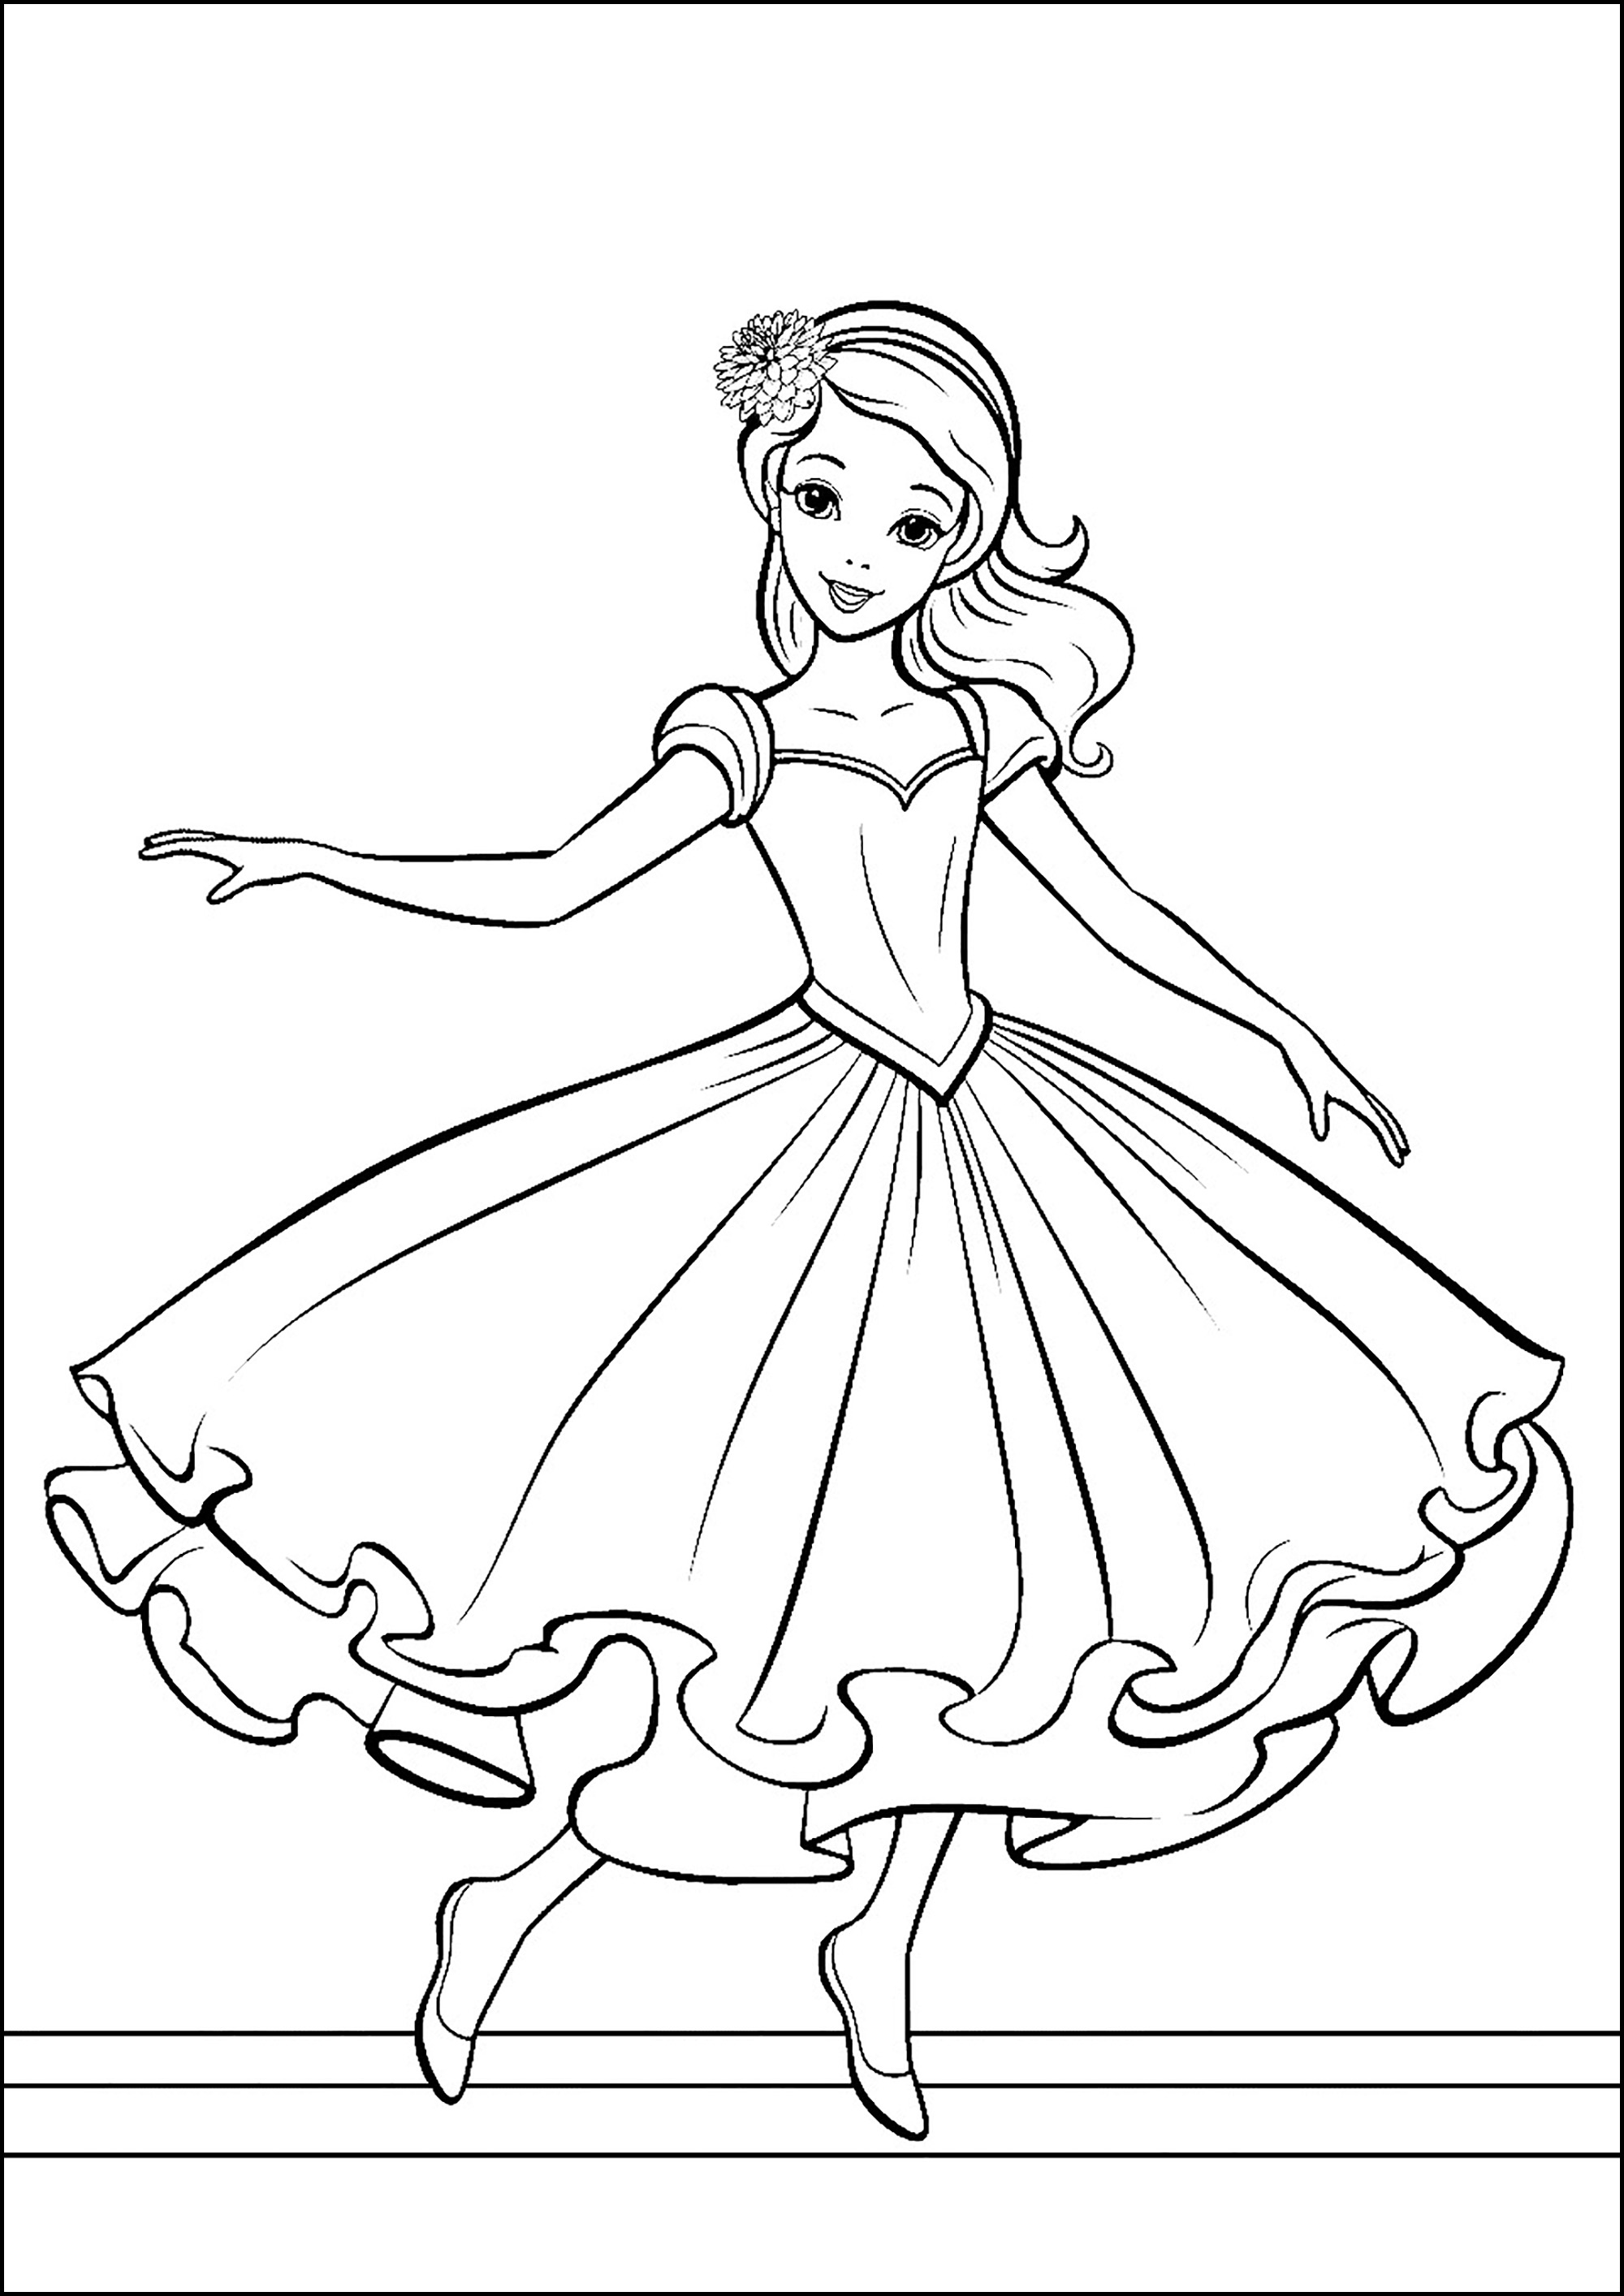 Magnífica bailarina con un gran vestido